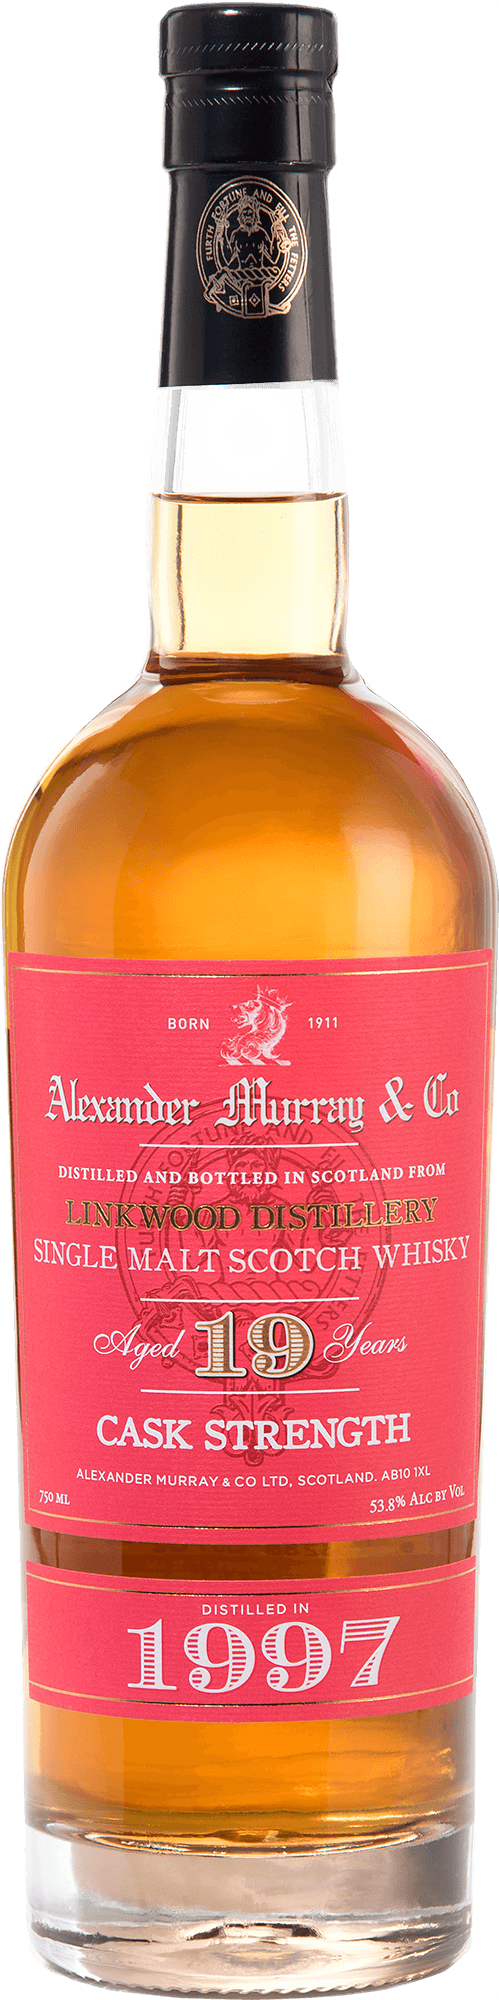 Alexander Murray 1997 Linkwood 19 Year Old Single Malt Scotch Whisky